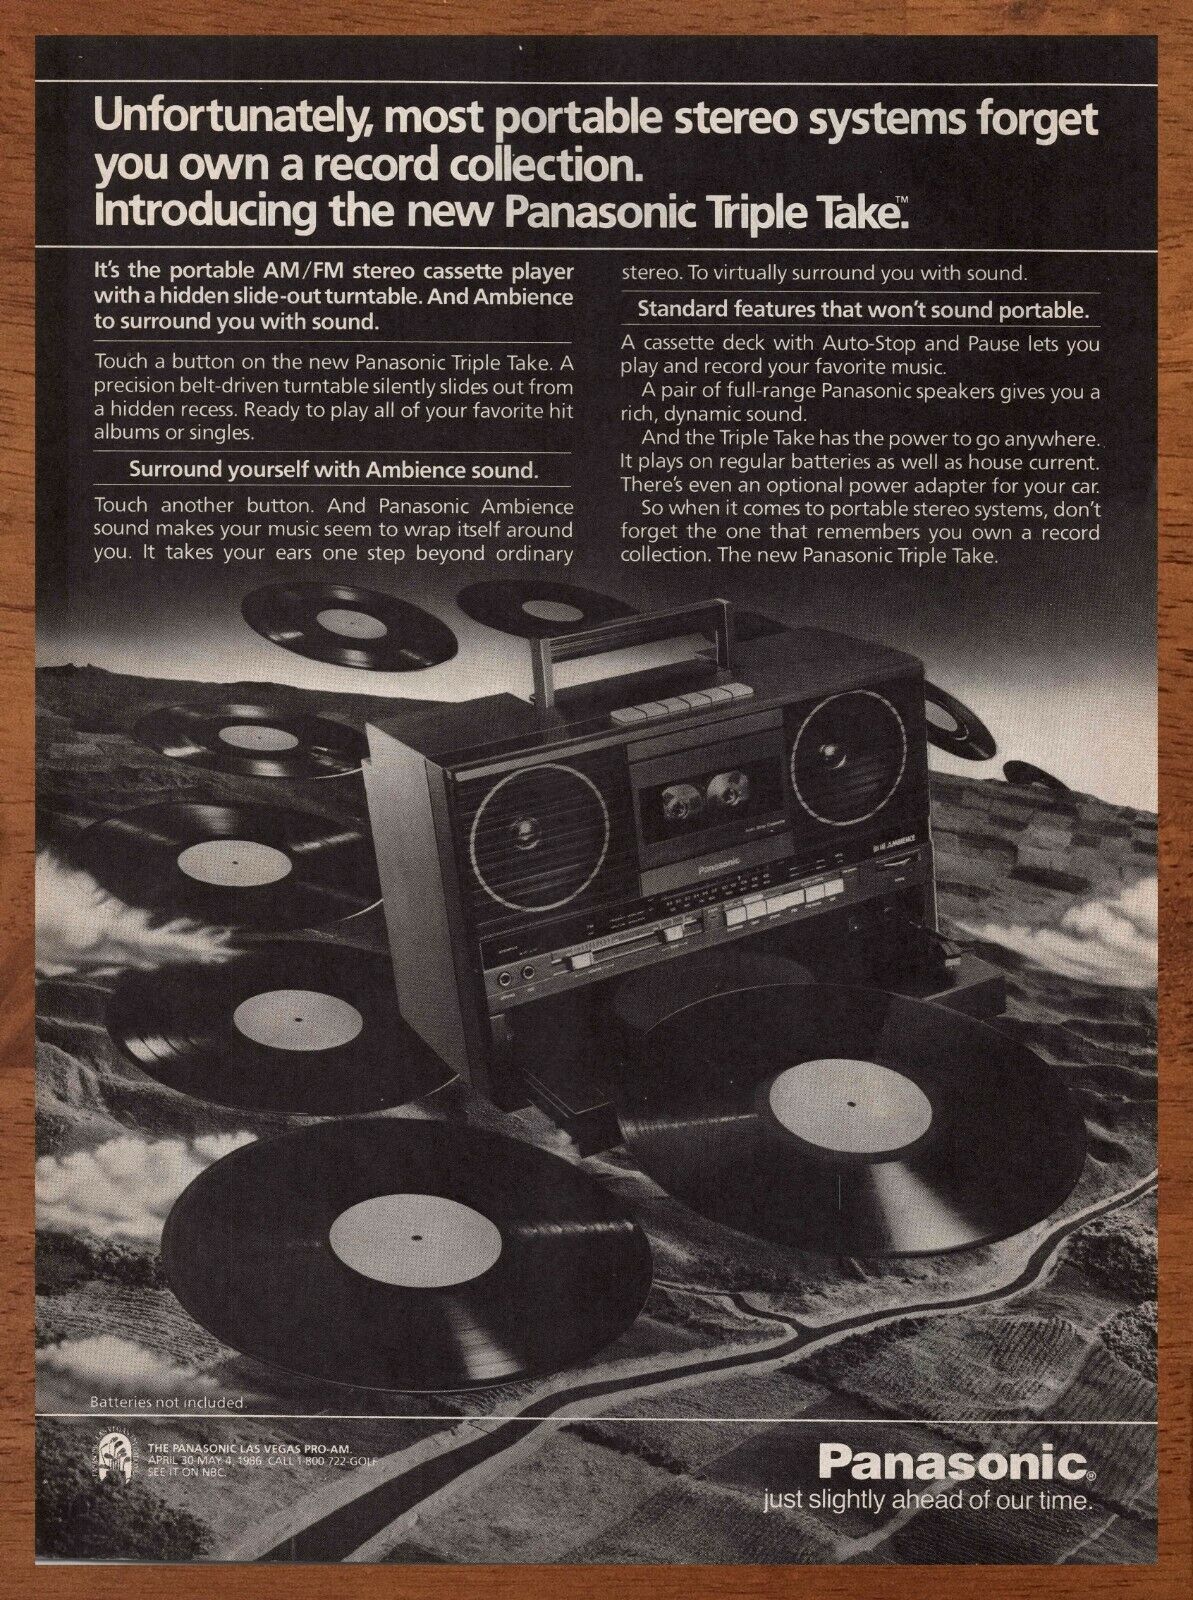 1985 Panasonic Triple Take Cassette Player Vintage Print Ad/Poster 80s Music  